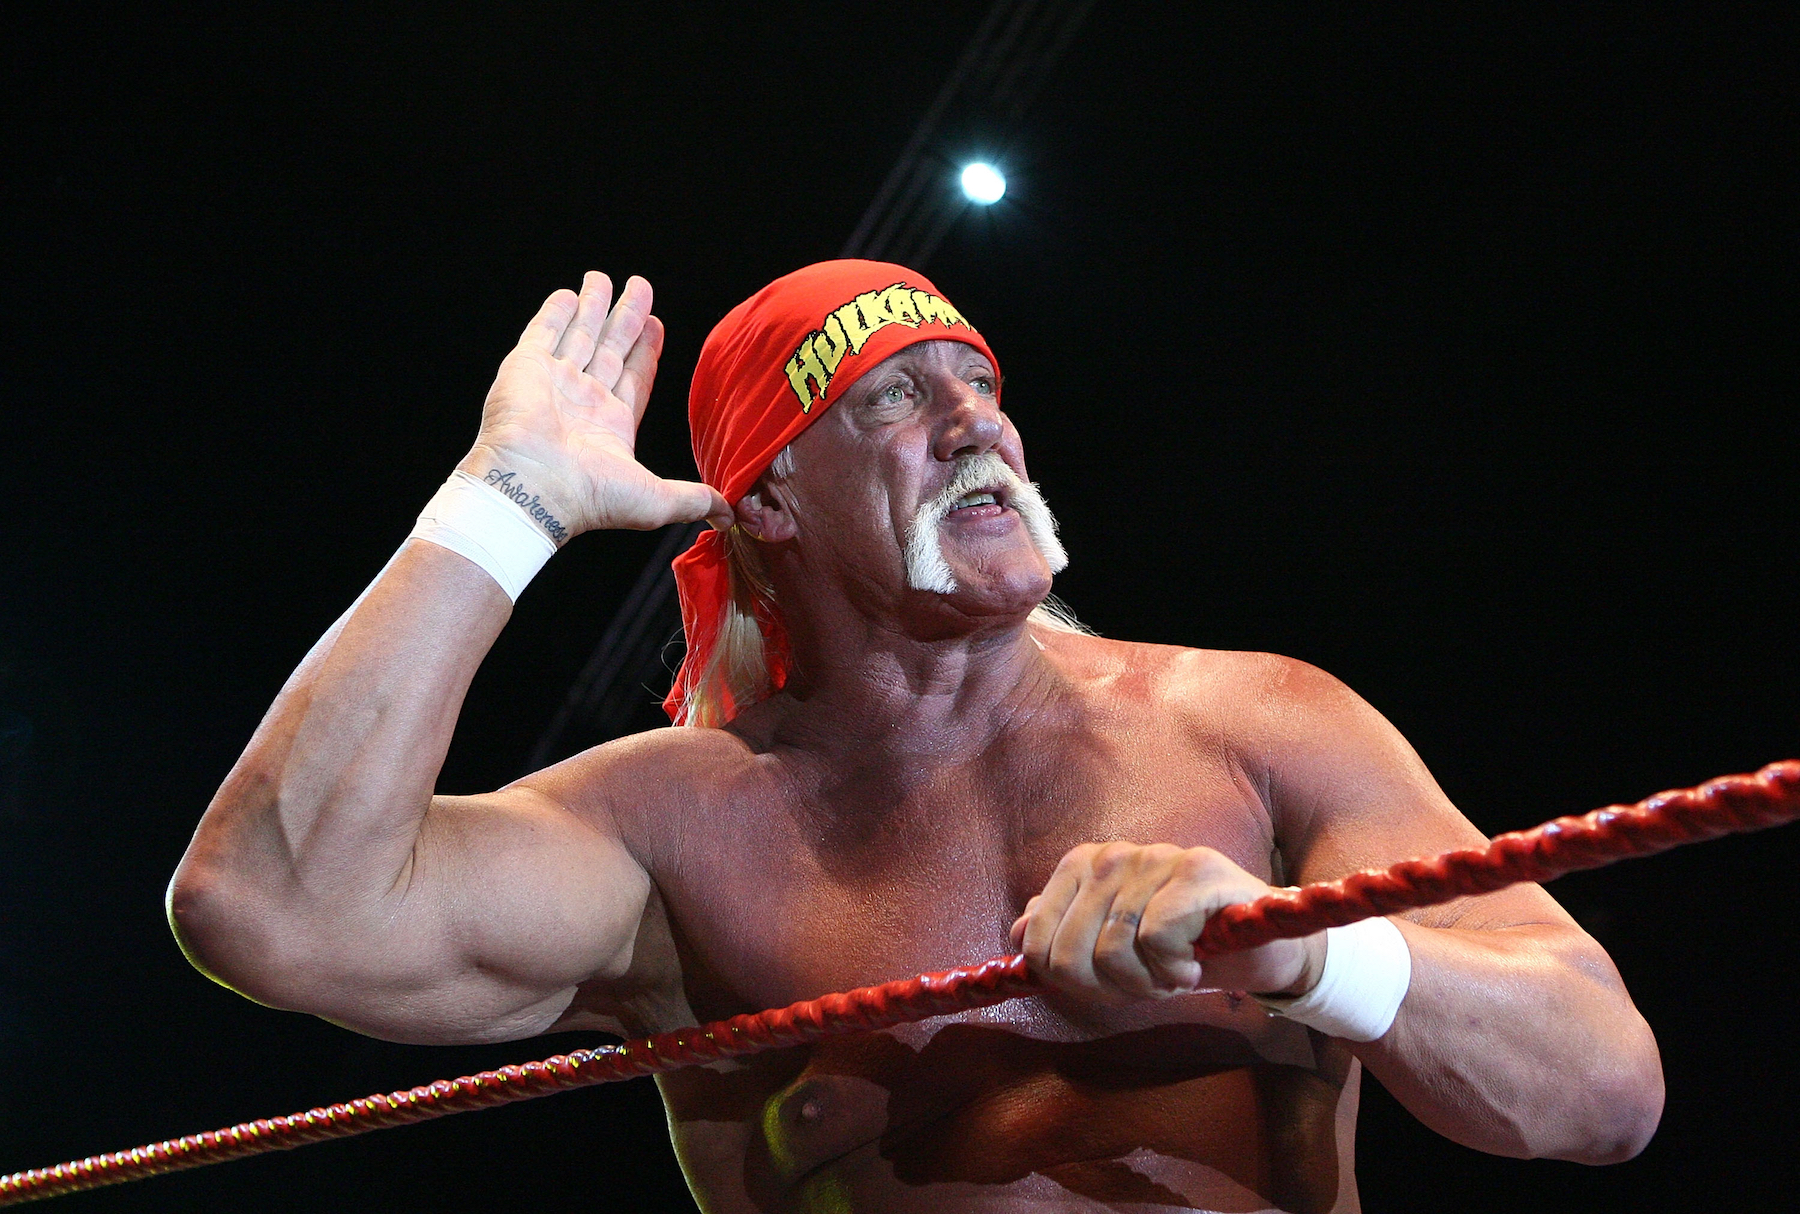 Hulk Hogan Speaks Out After WWE Reinstatement After Suspension